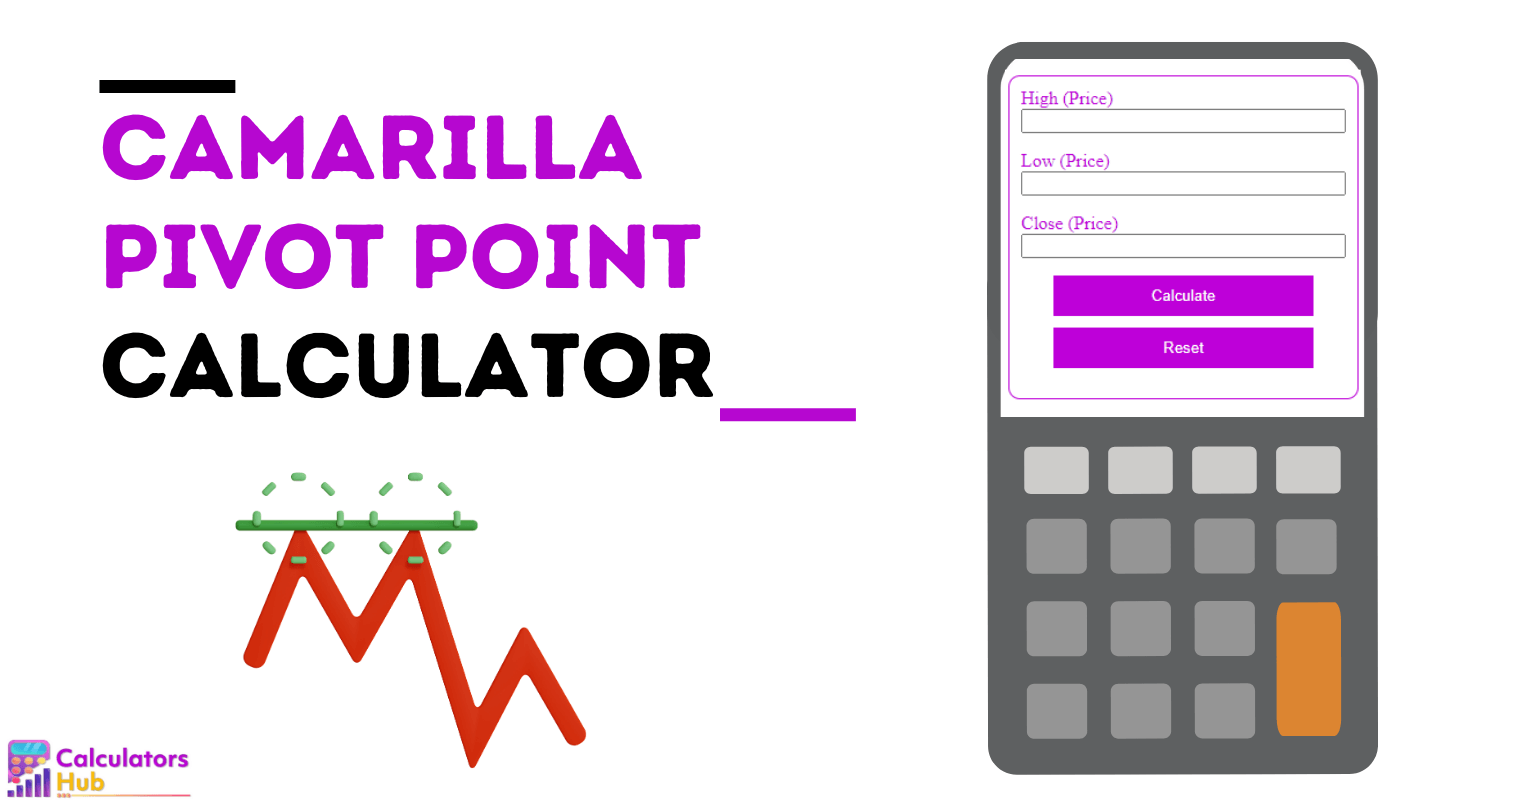 Camarilla Pivot Point Calculator